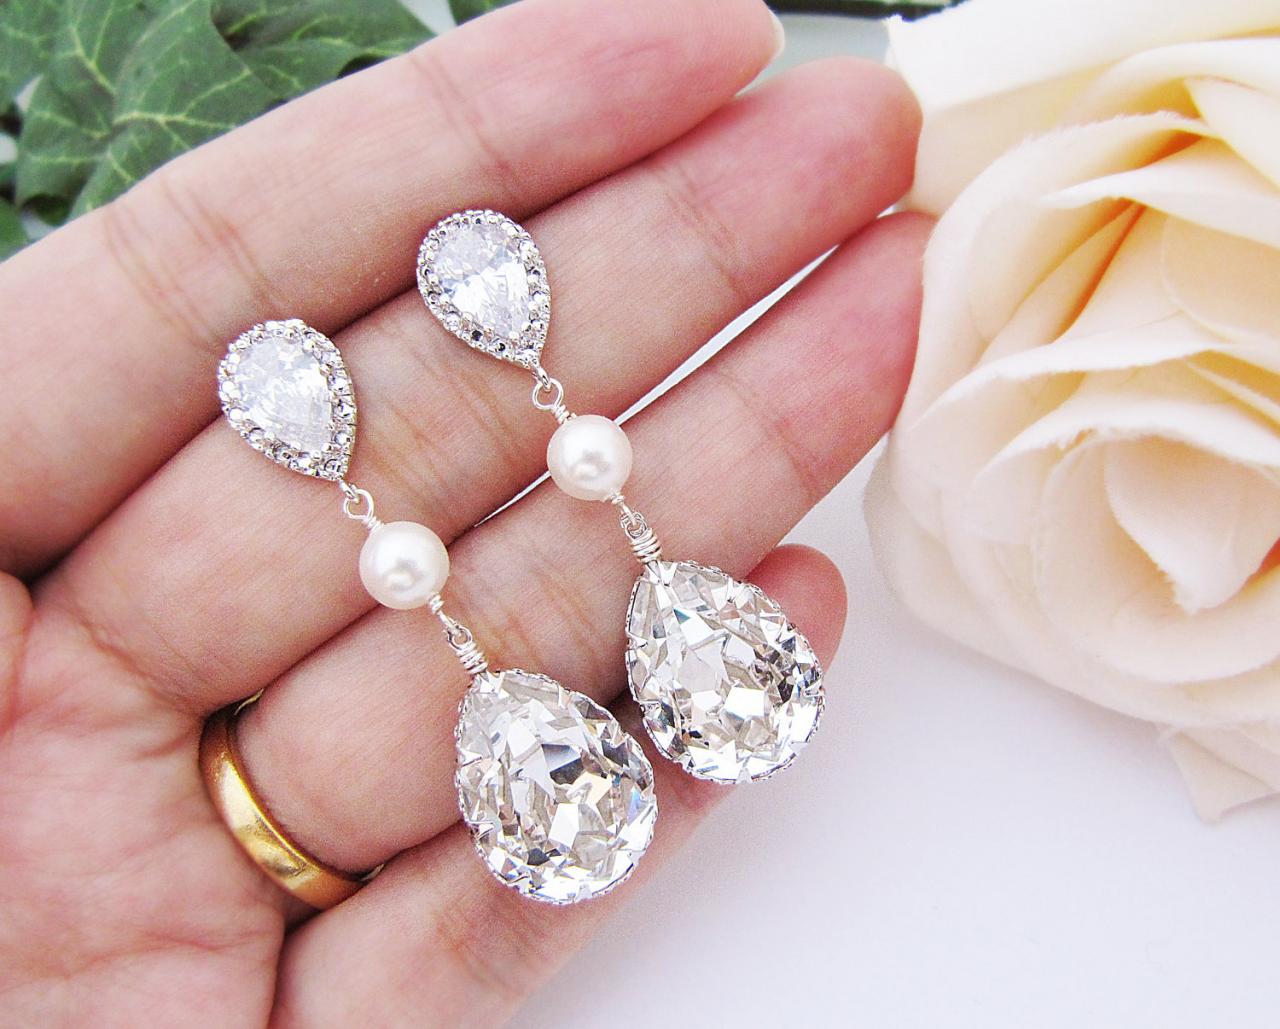 Wedding Jewelry Bridal Earrings Bridesmaid Gift Bridesmaid Earrings Cz Ear Posts With Swarovski Crystal And Pearls Drop Dangle Earrings